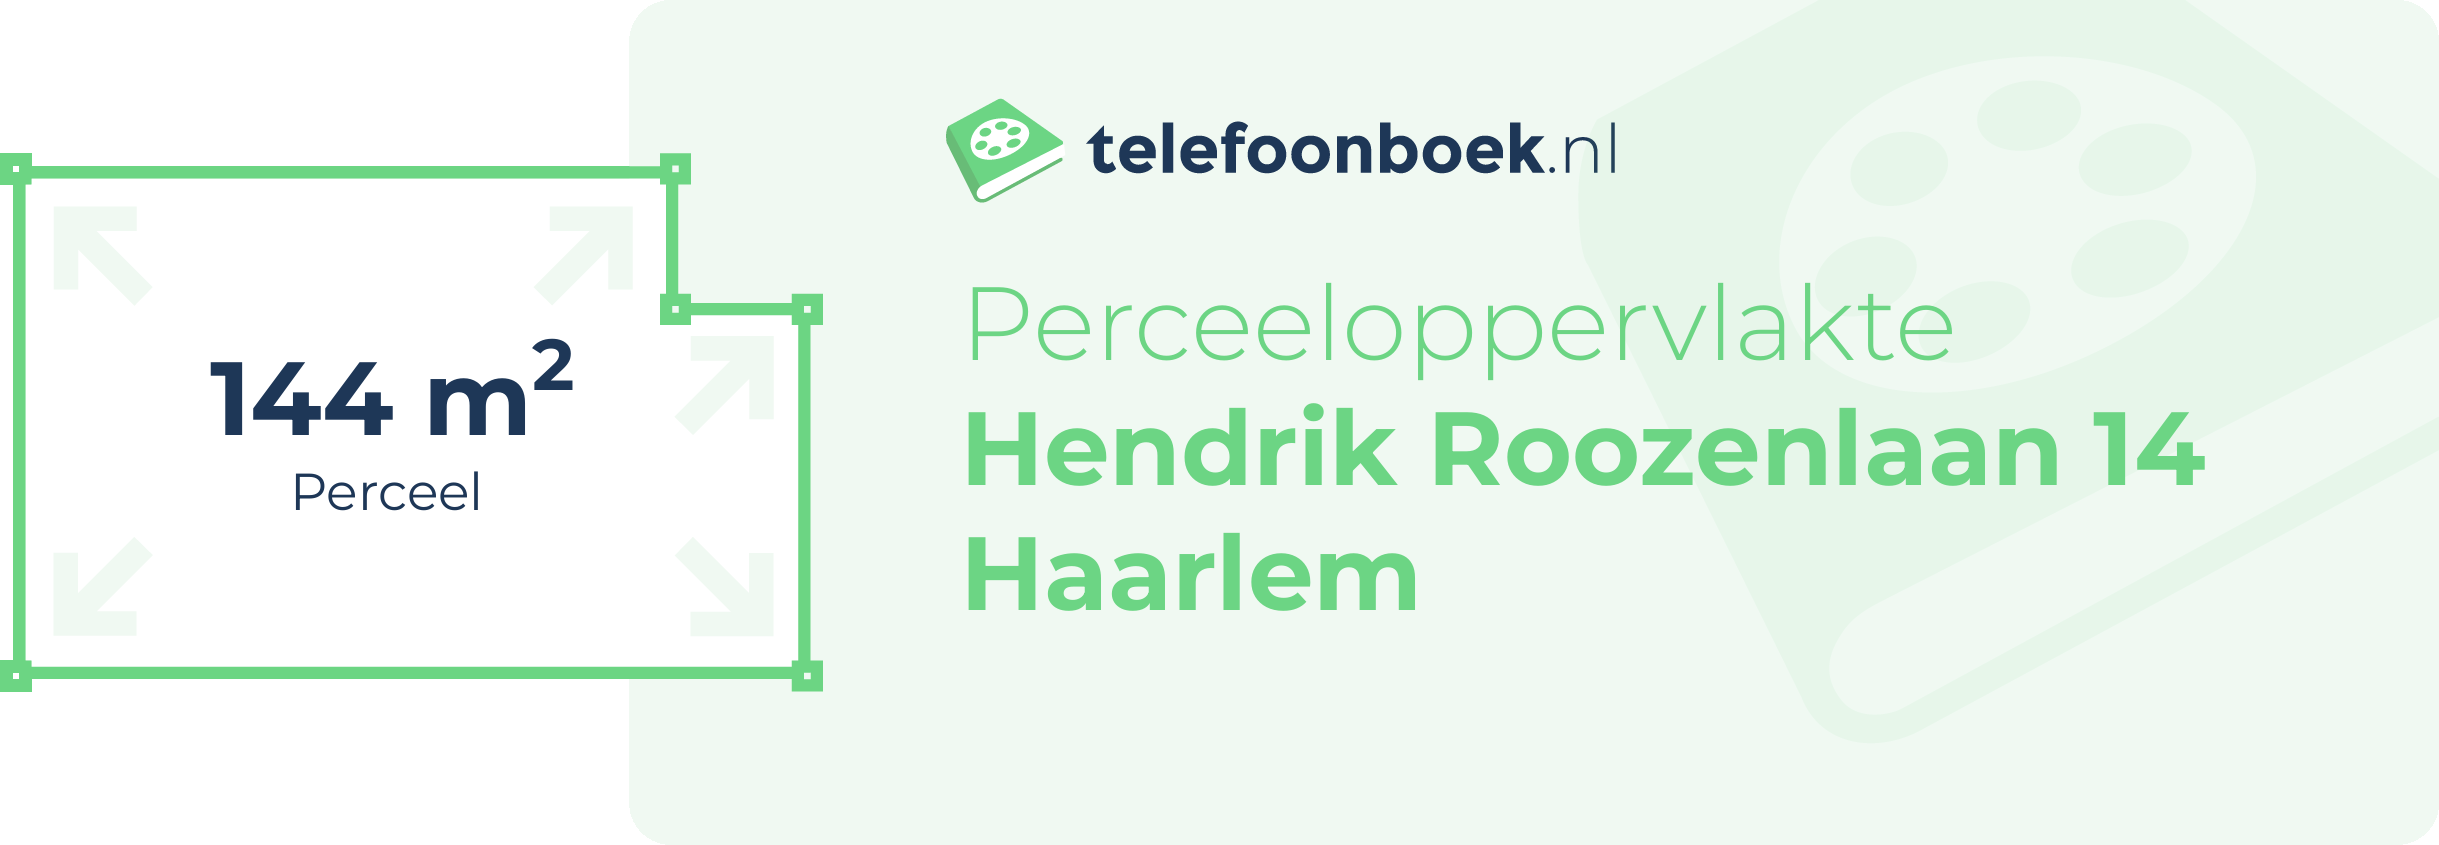 Perceeloppervlakte Hendrik Roozenlaan 14 Haarlem